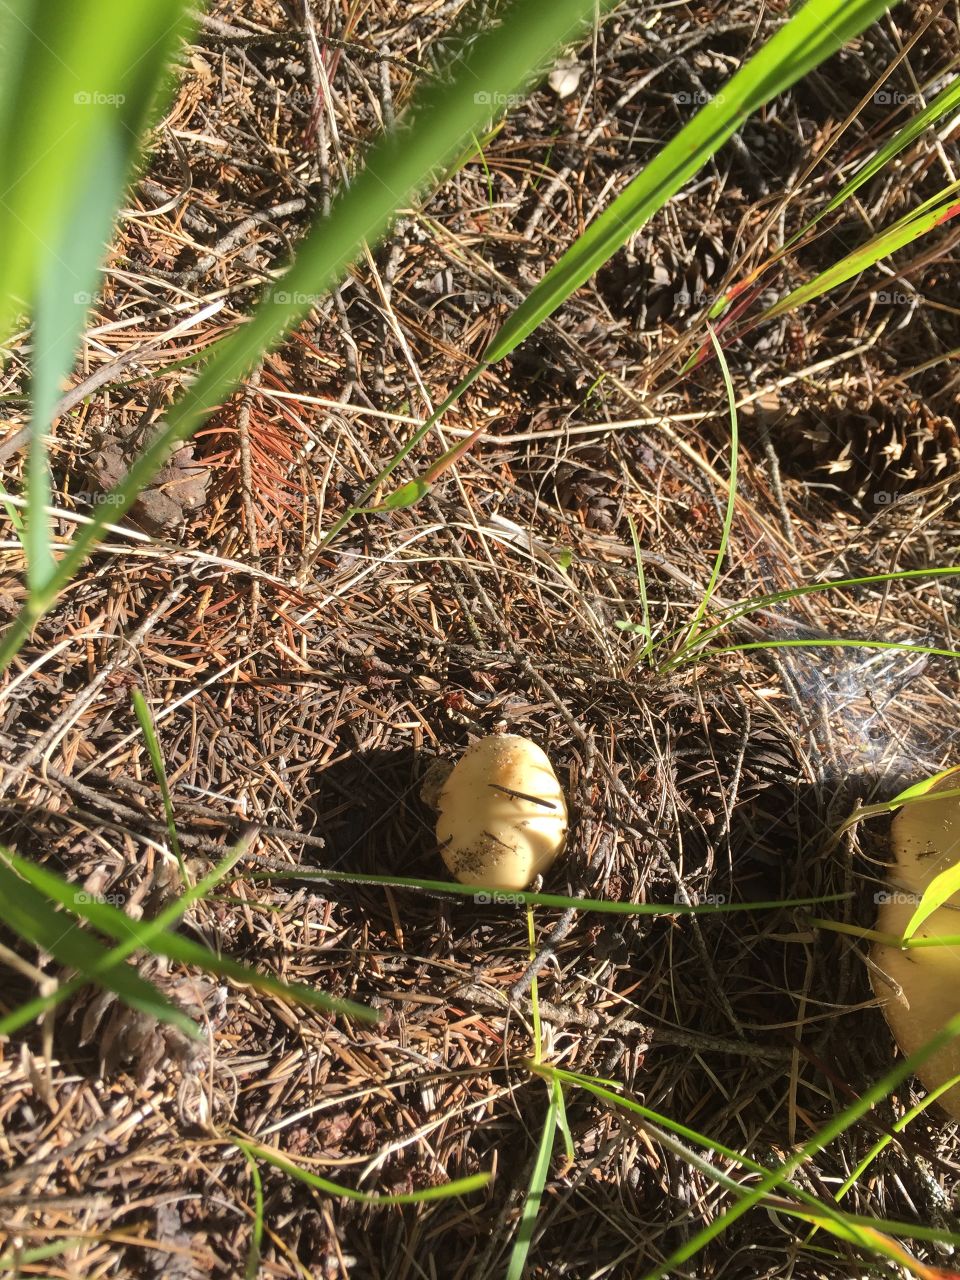 Found this fungus randomly growing in my yard 